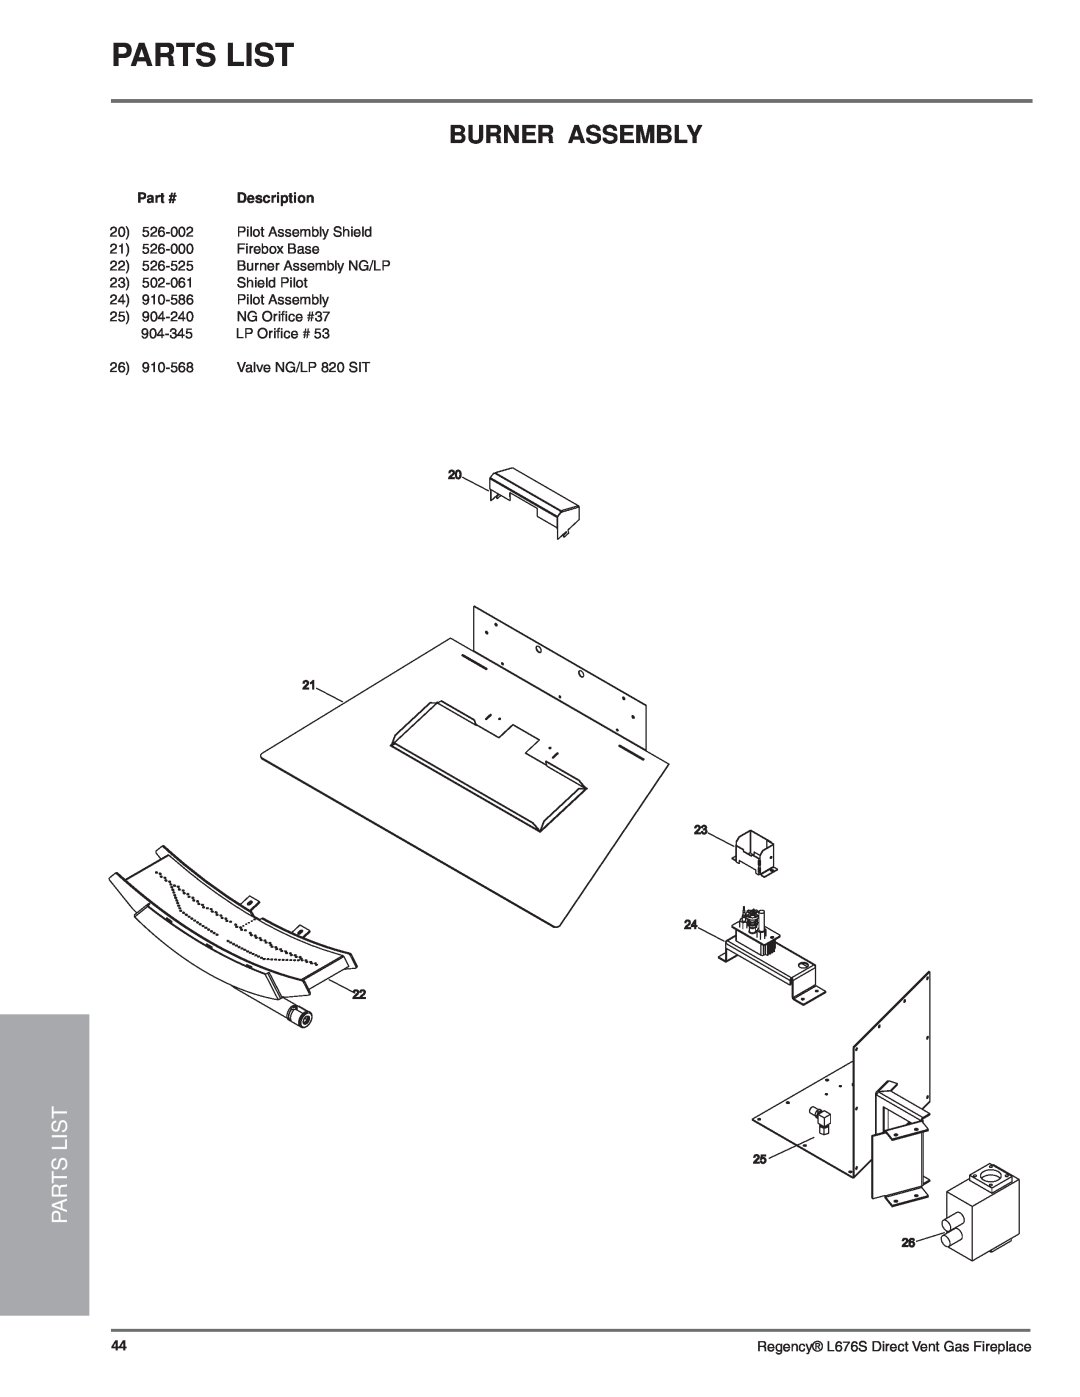 Regency L676S-NG1 installation manual Parts List, Burner Assembly, Description 